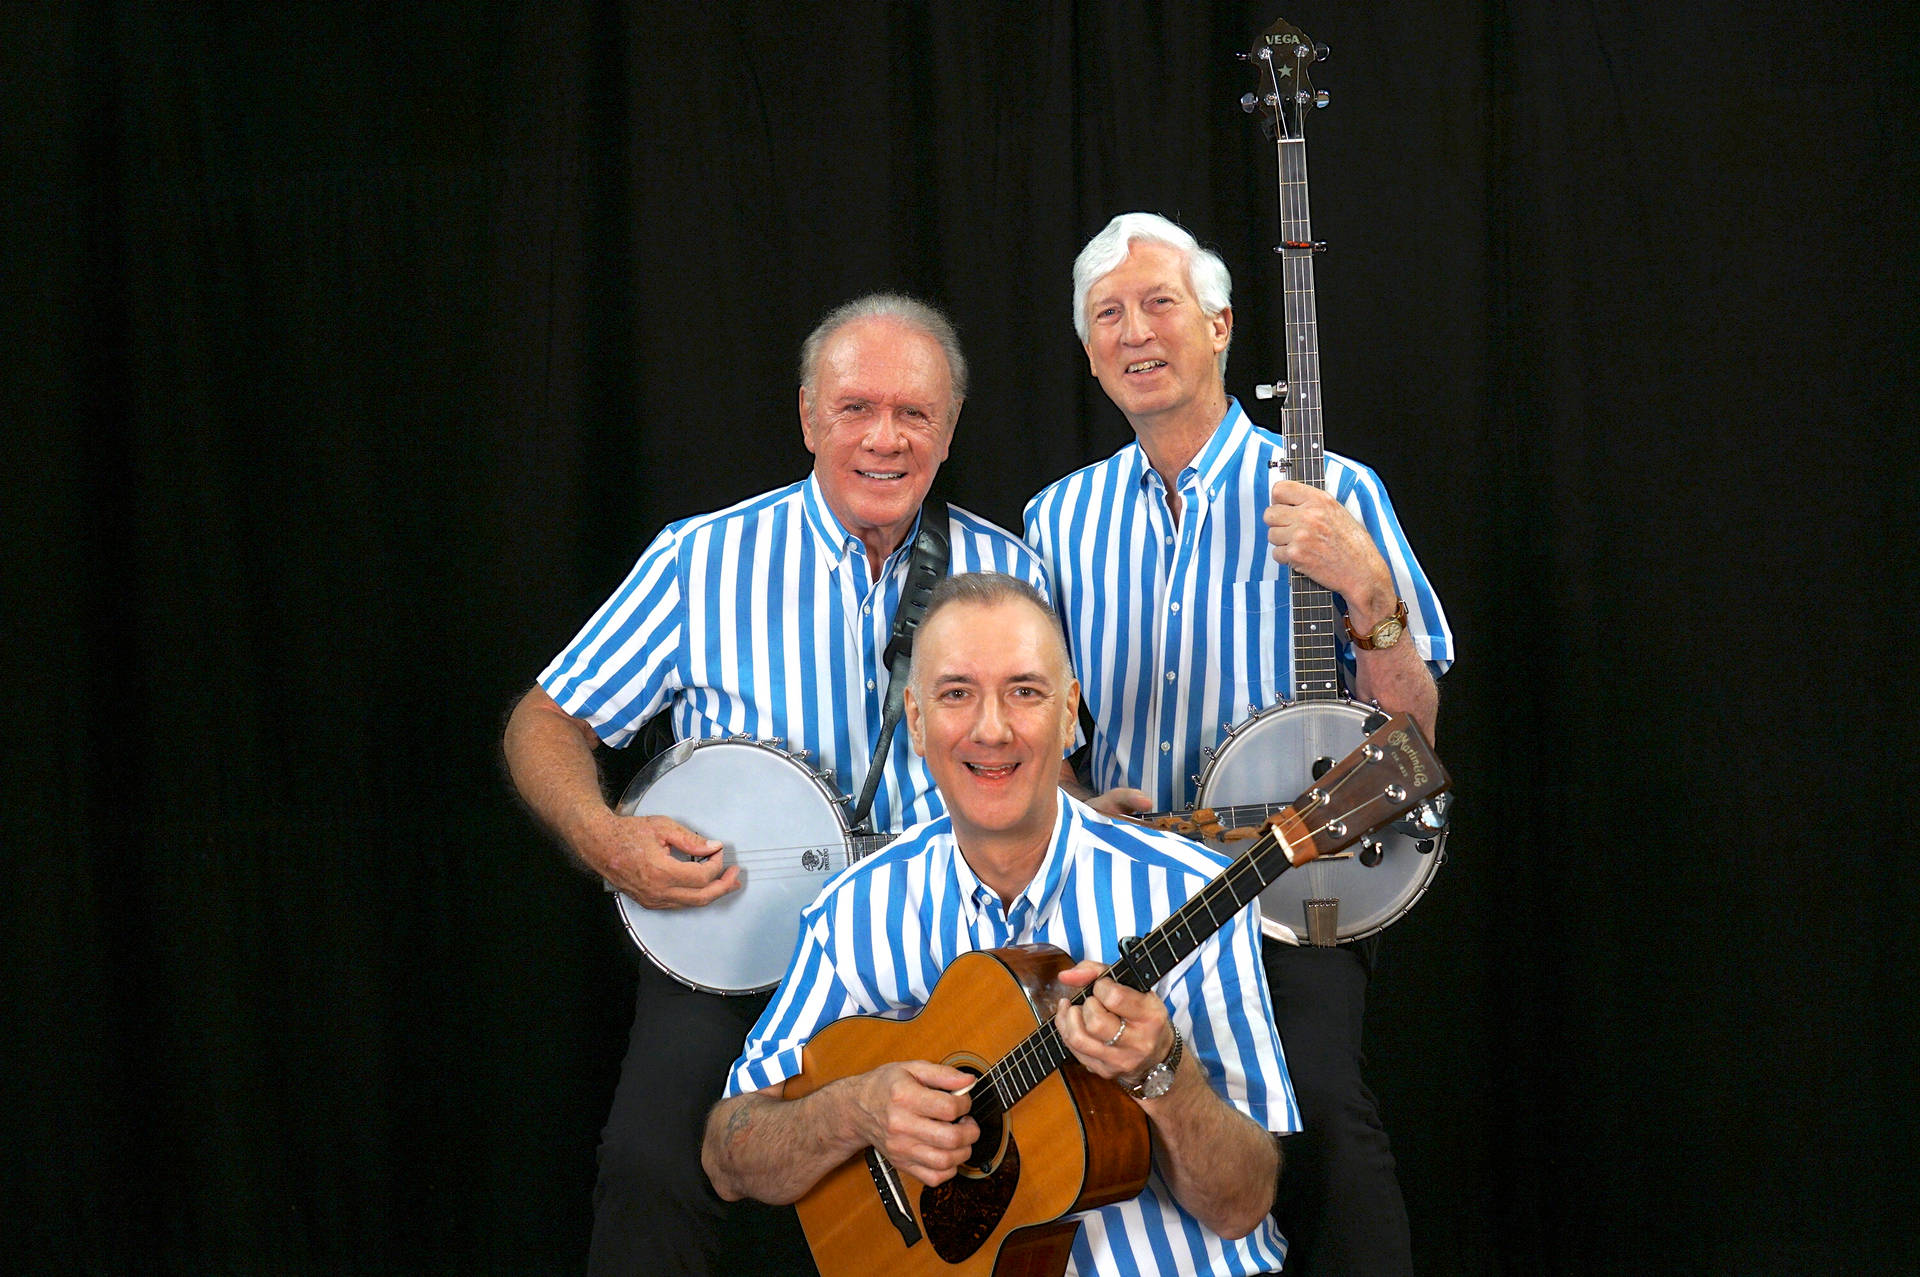 The Kingston Trio at a Photoshoot by Chris Devlin Wallpaper